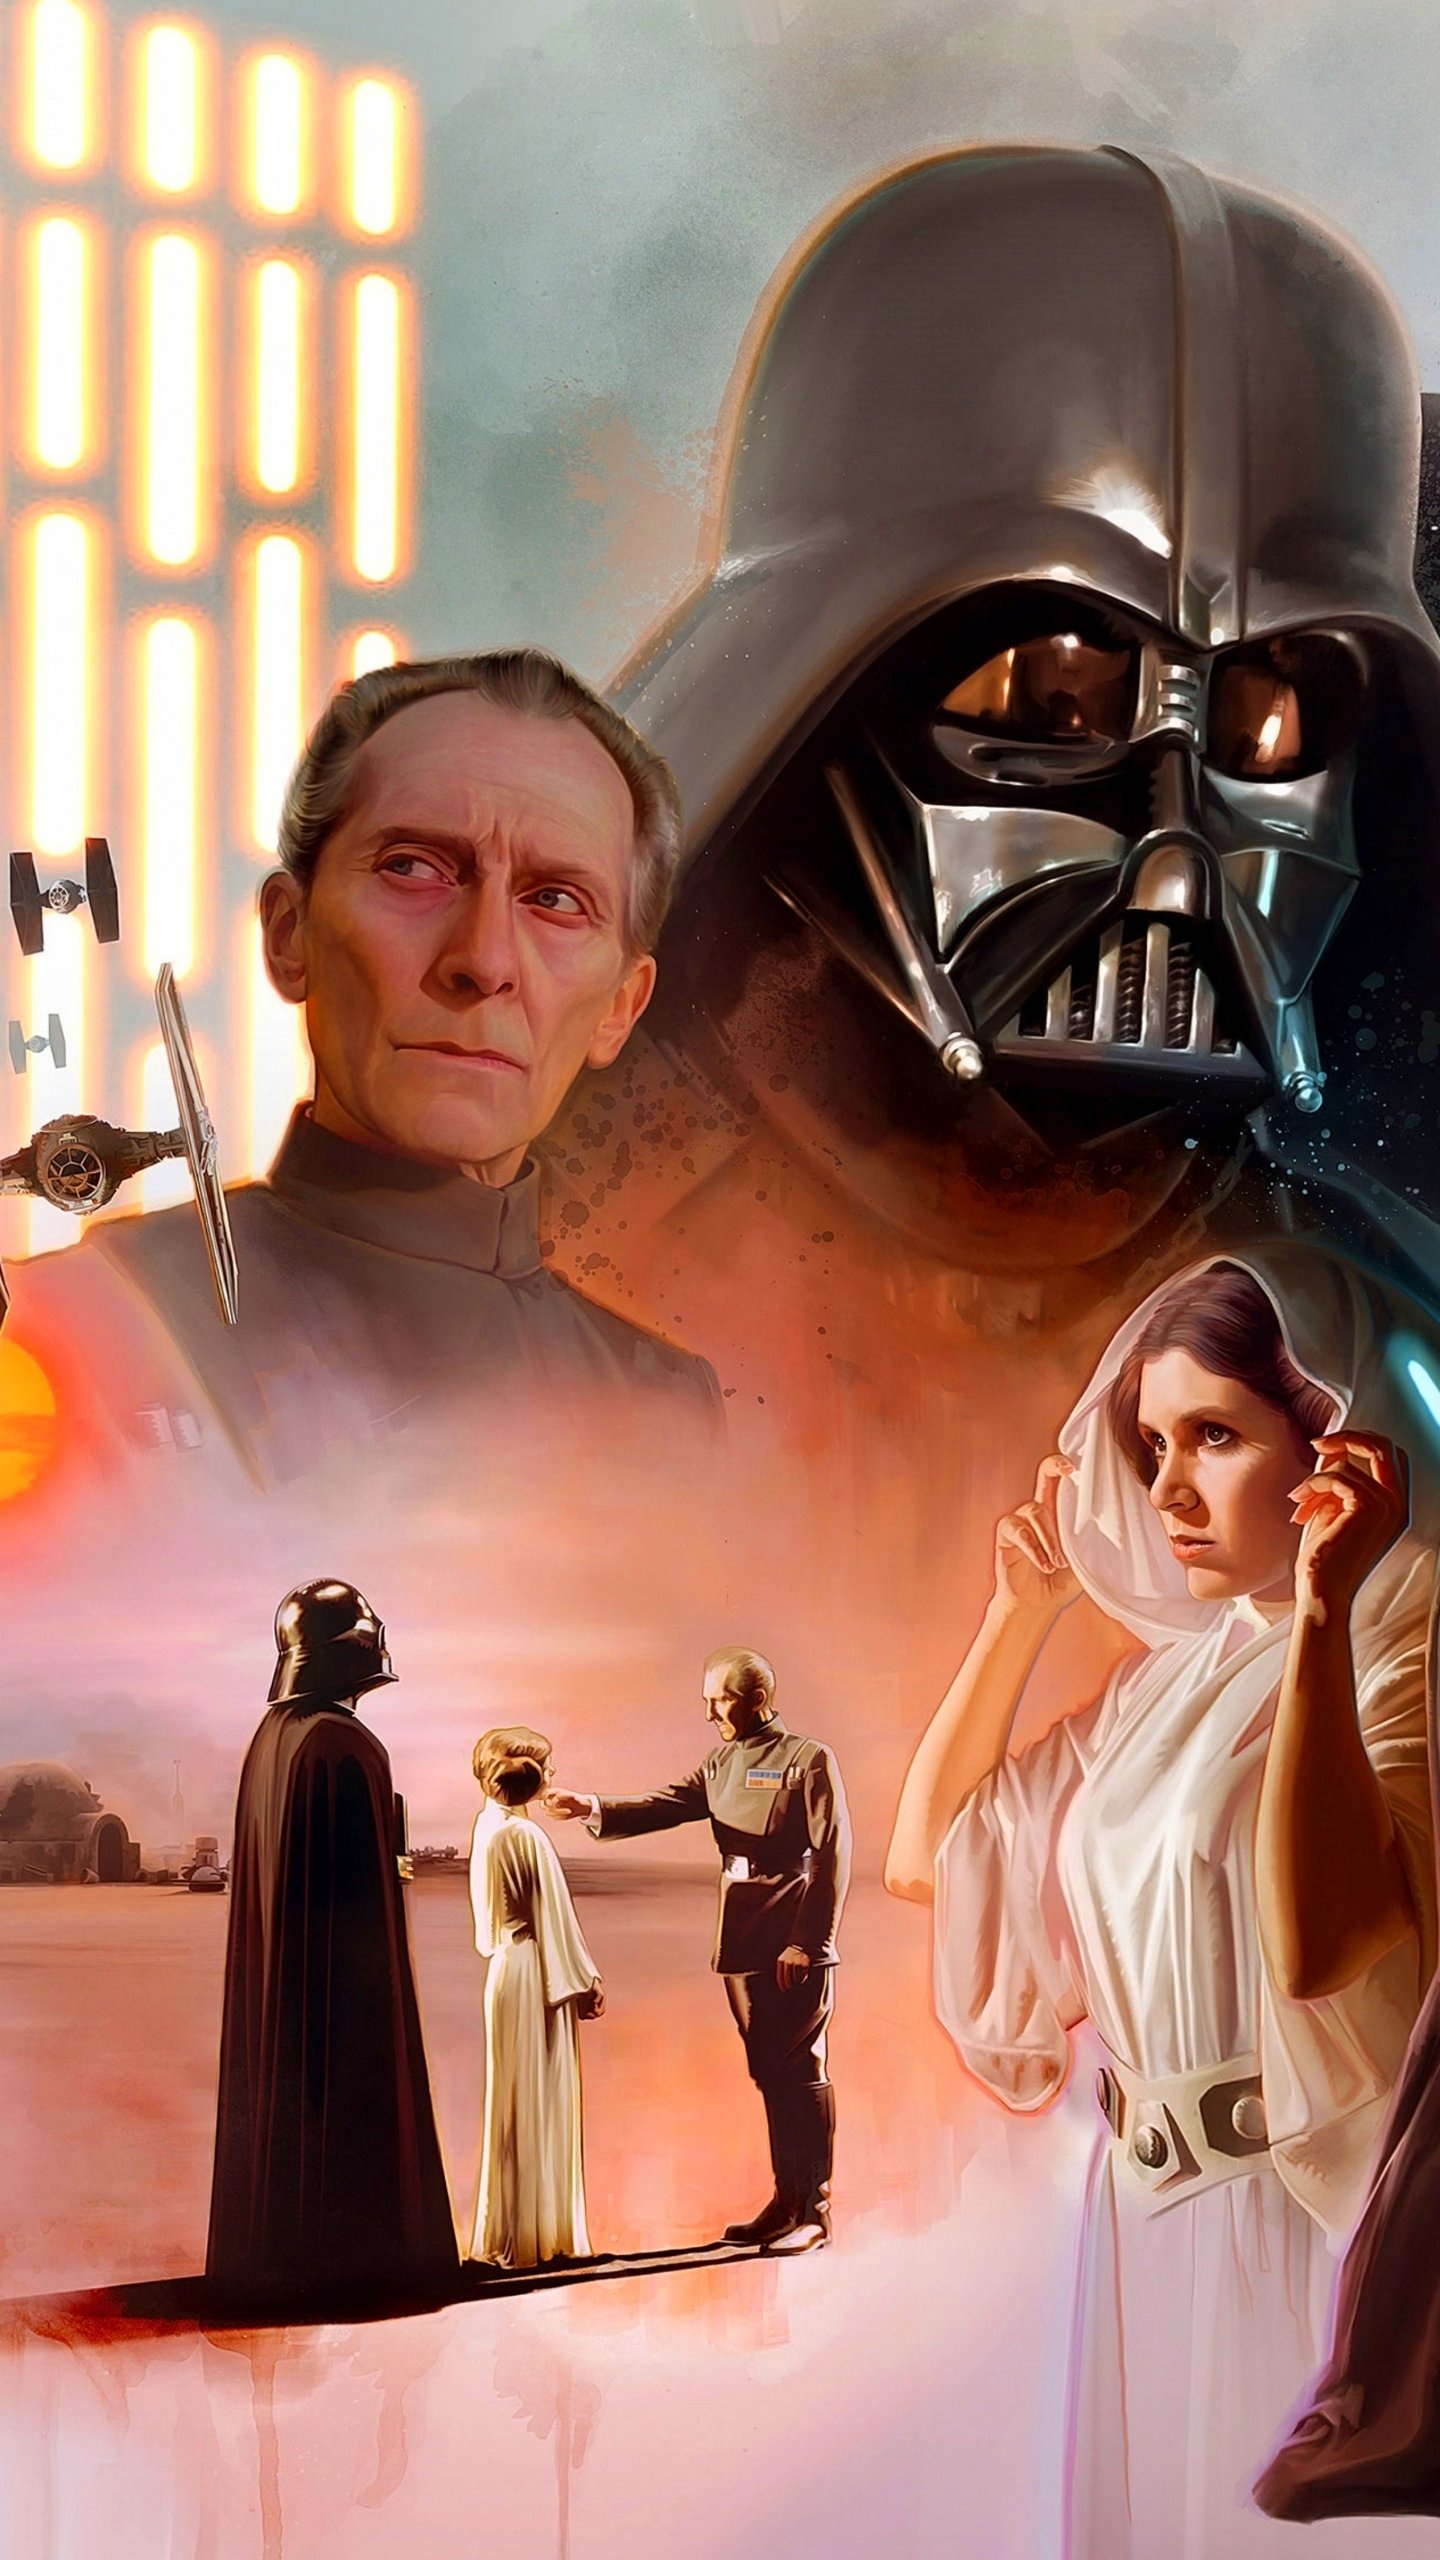 Princess Leia: Sci-fi, Star Wars trilogy, Skywalker Saga, Mother to Ben Solo. 1440x2560 HD Wallpaper.